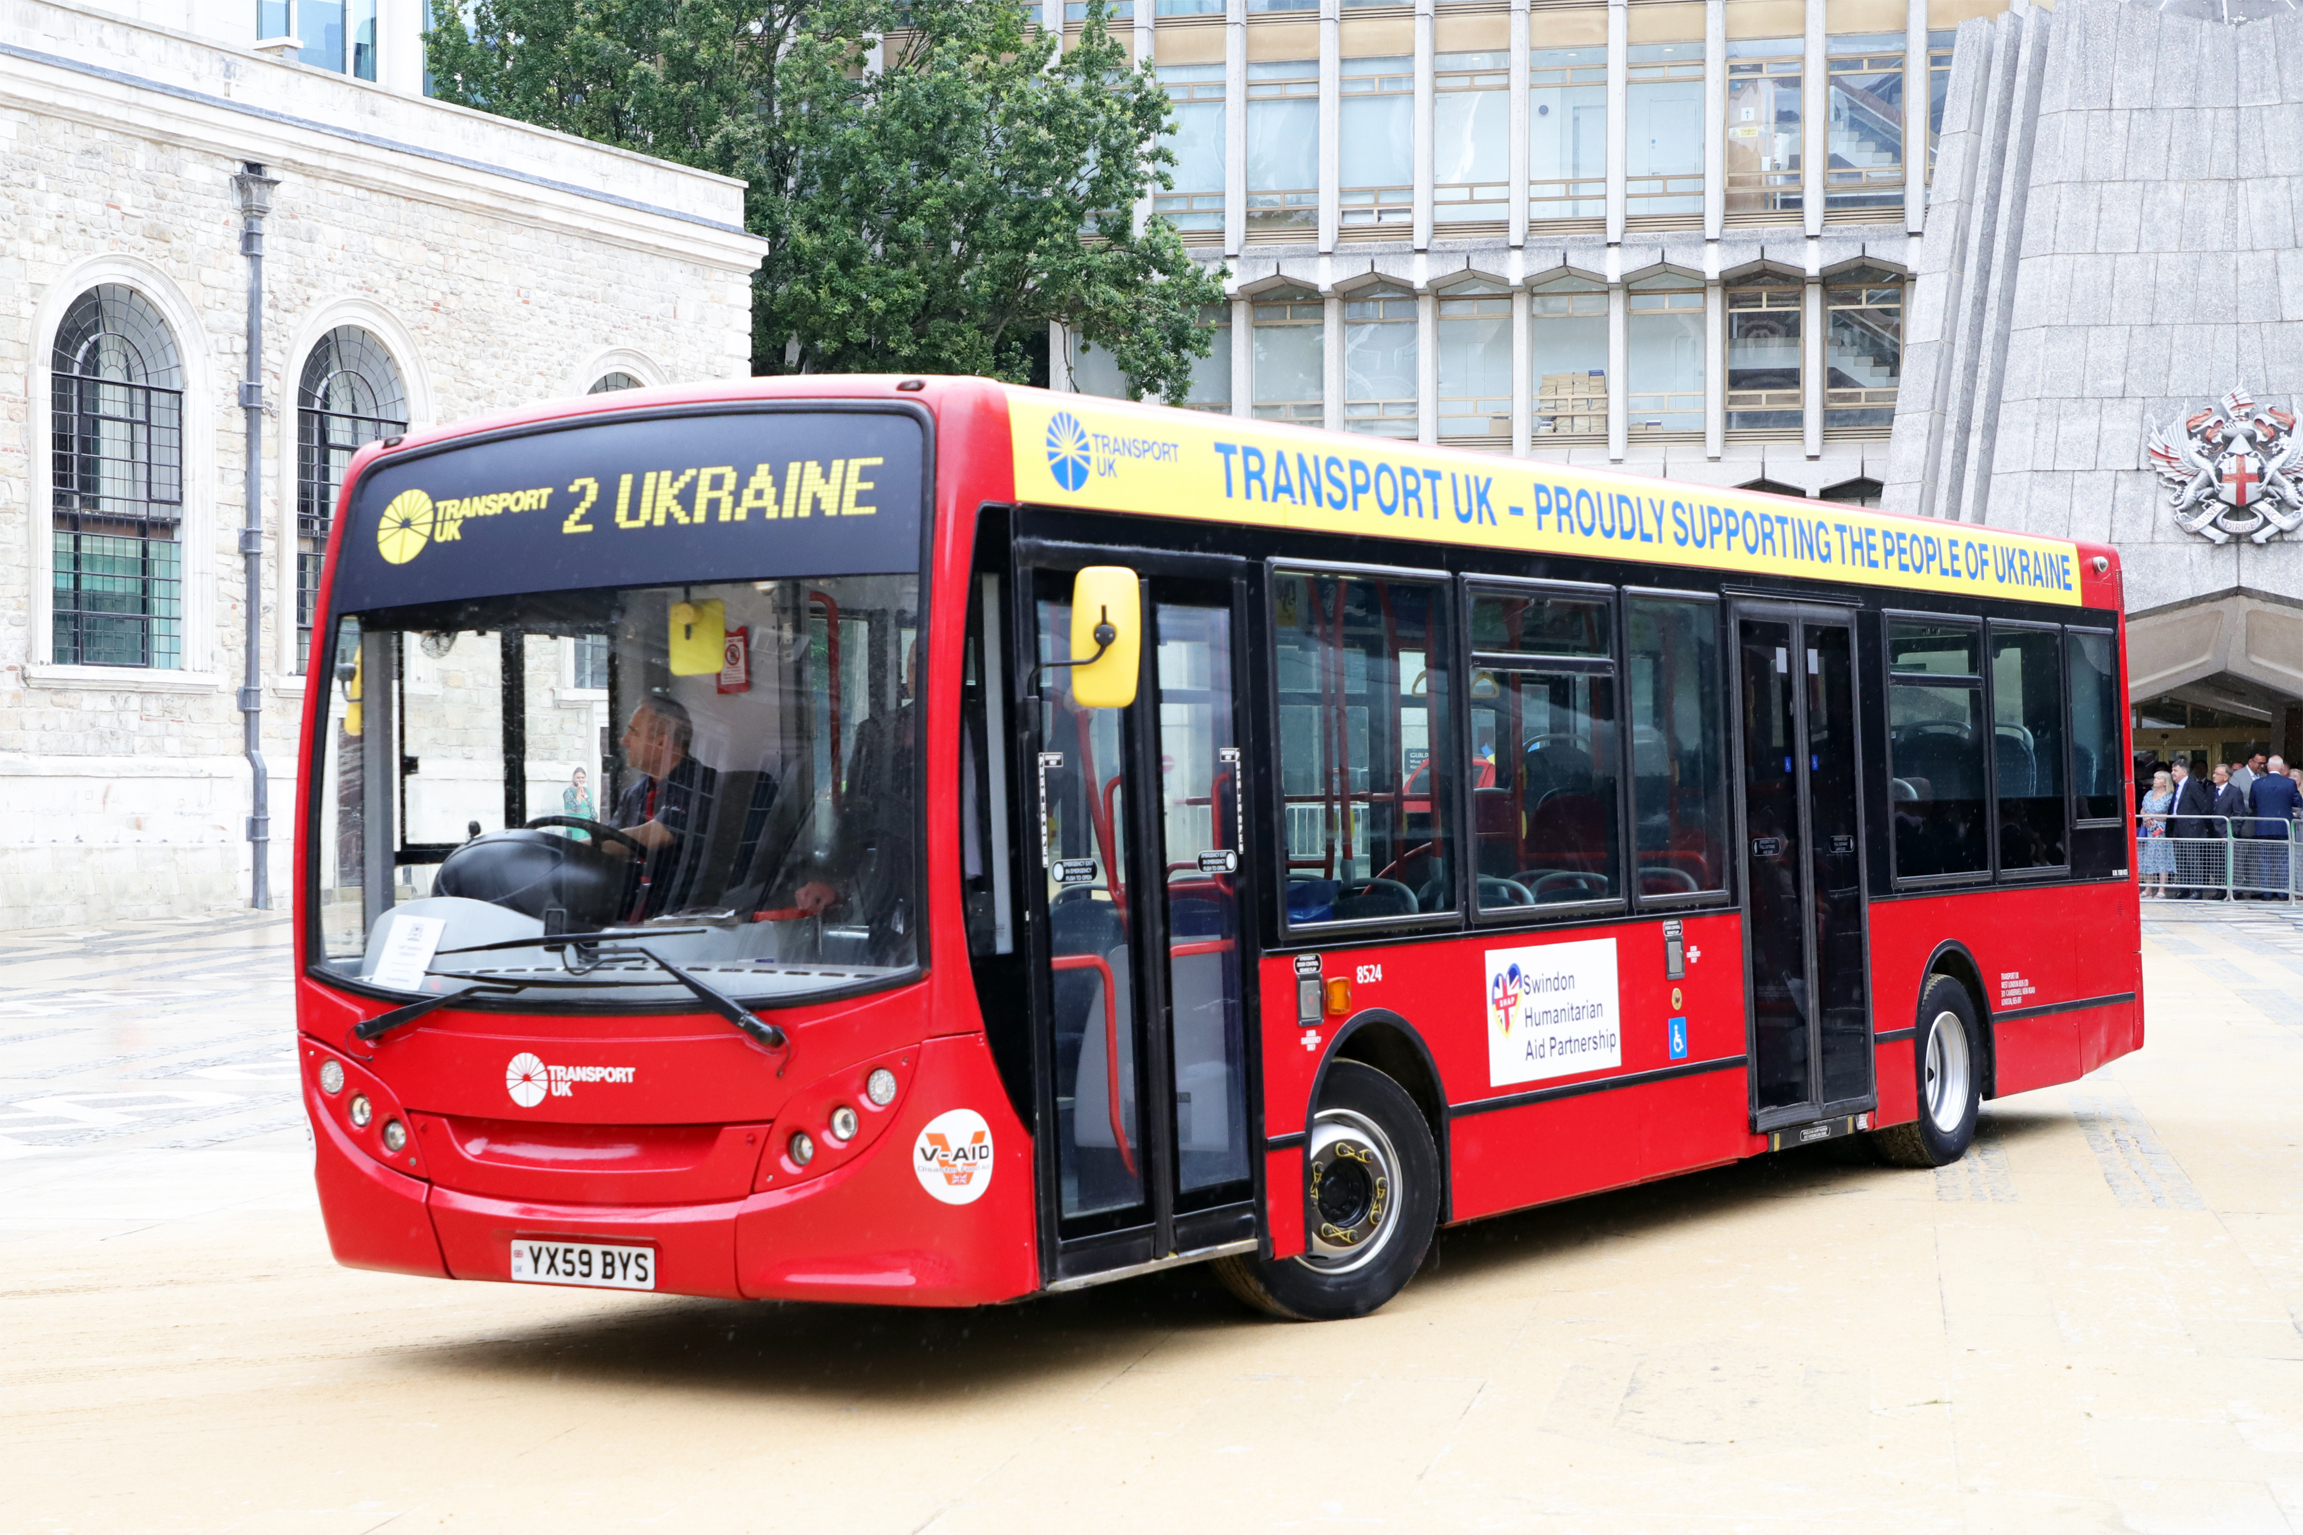 Transport UK London Bus operates aid service to Ukraine